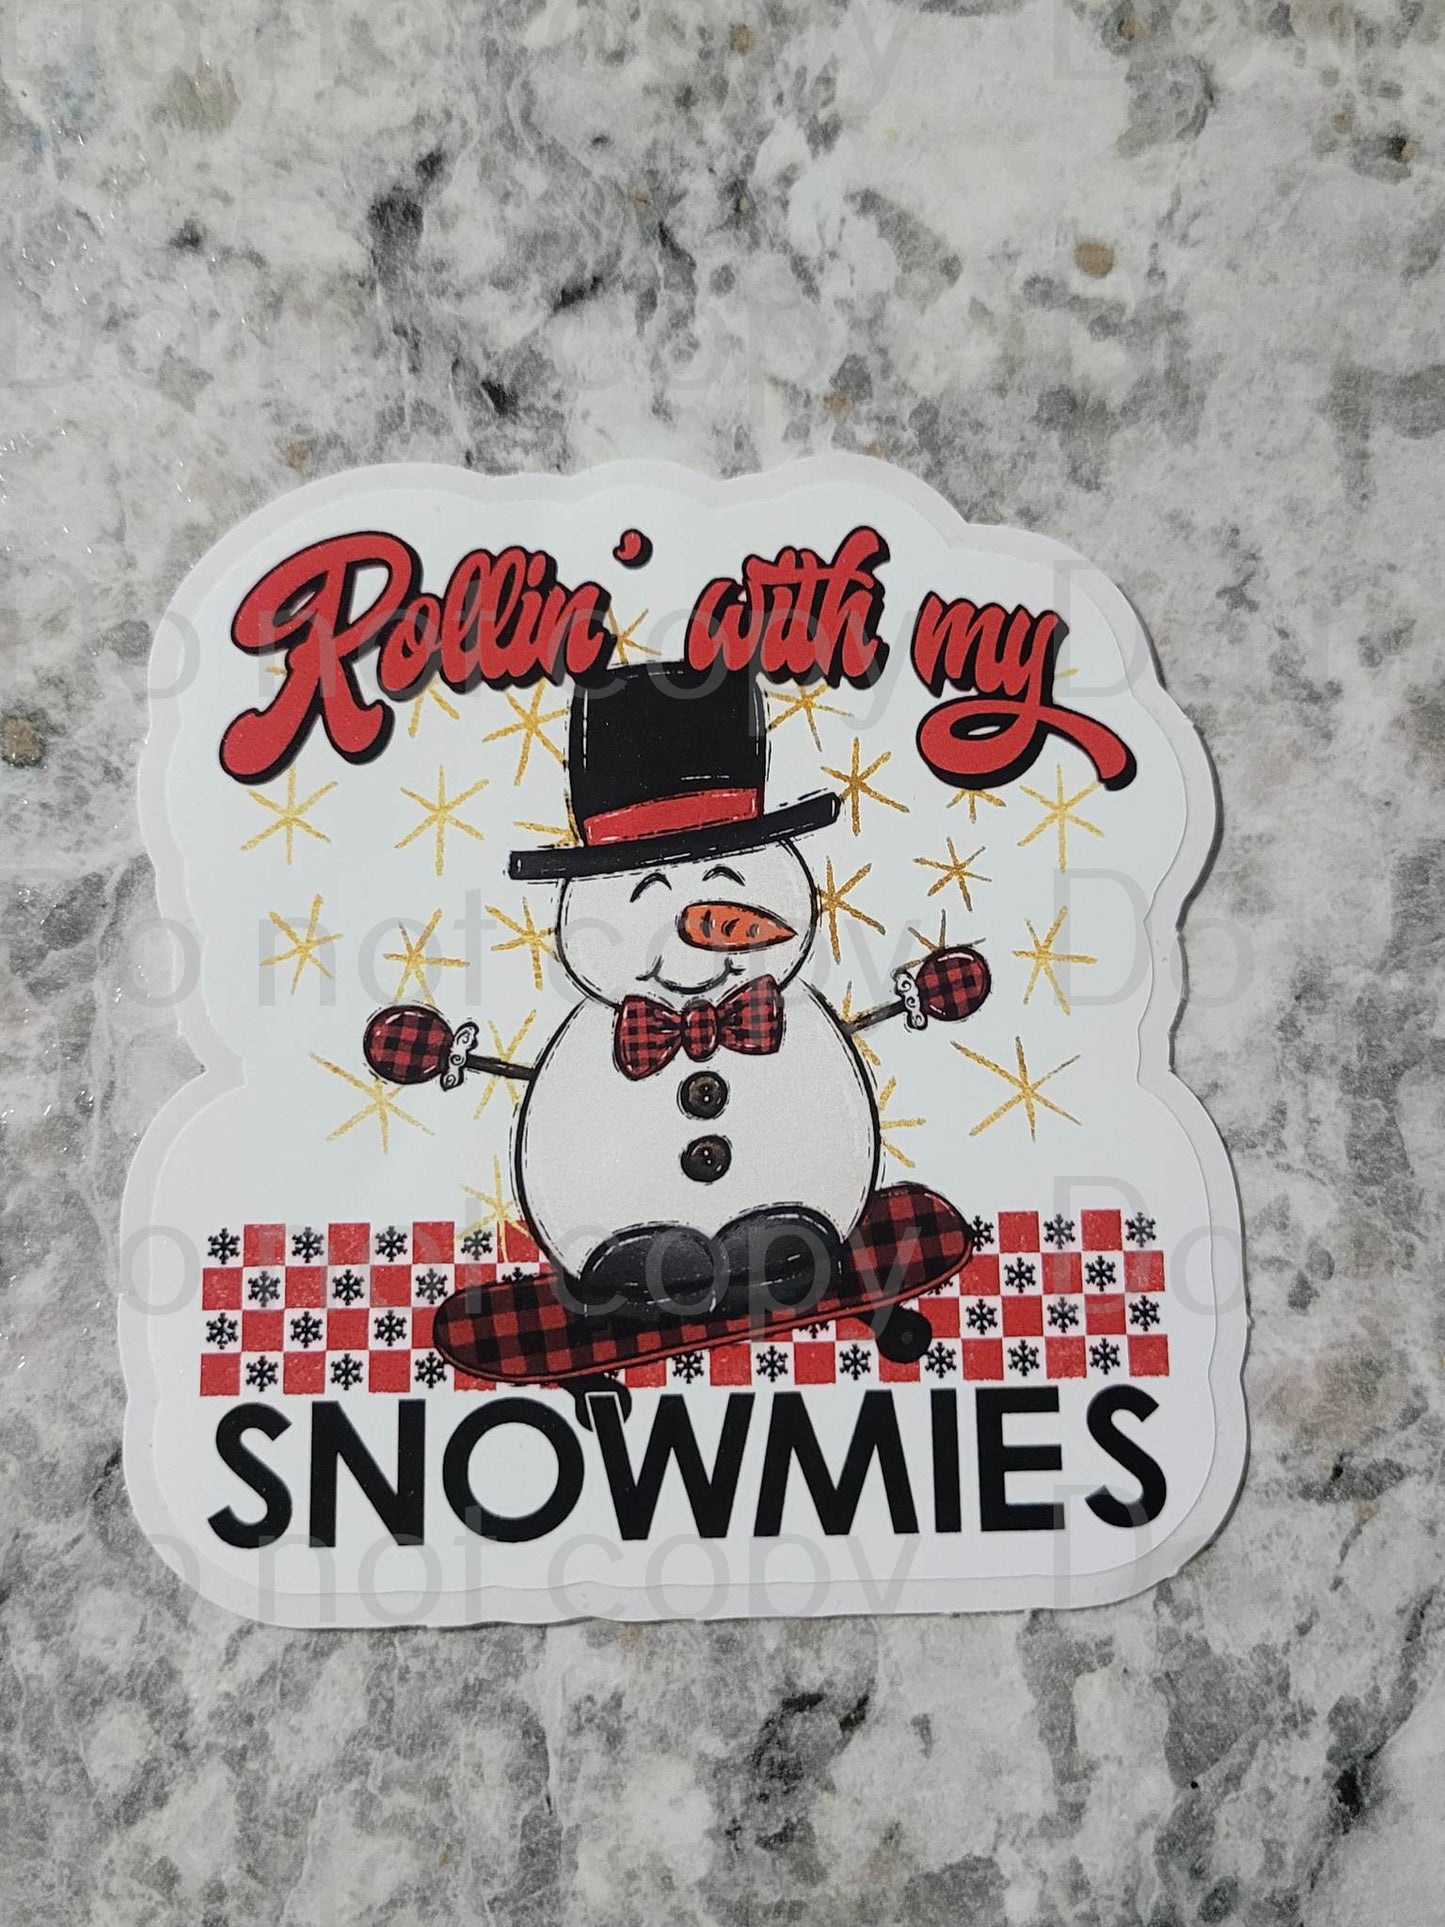 Rollin' with my snowmies Die cut sticker 3-5 Business Day TAT.